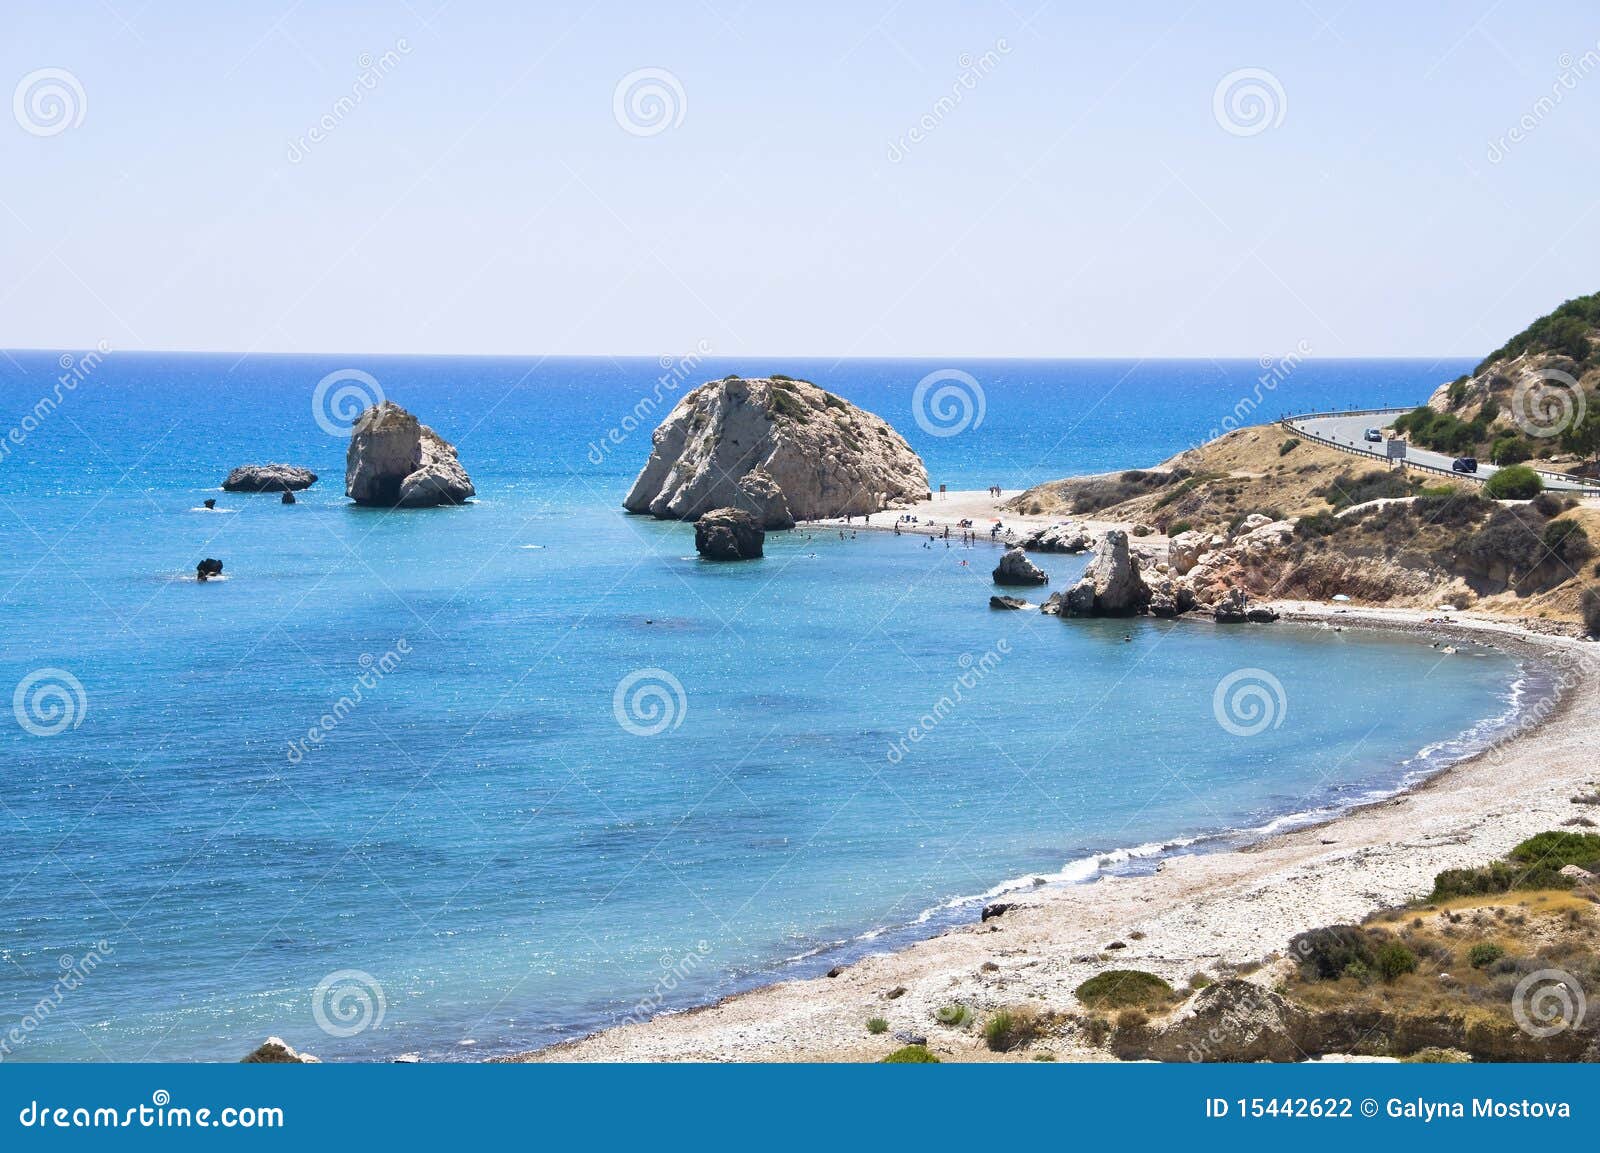 goddess aphrodite venus rock in cyprus